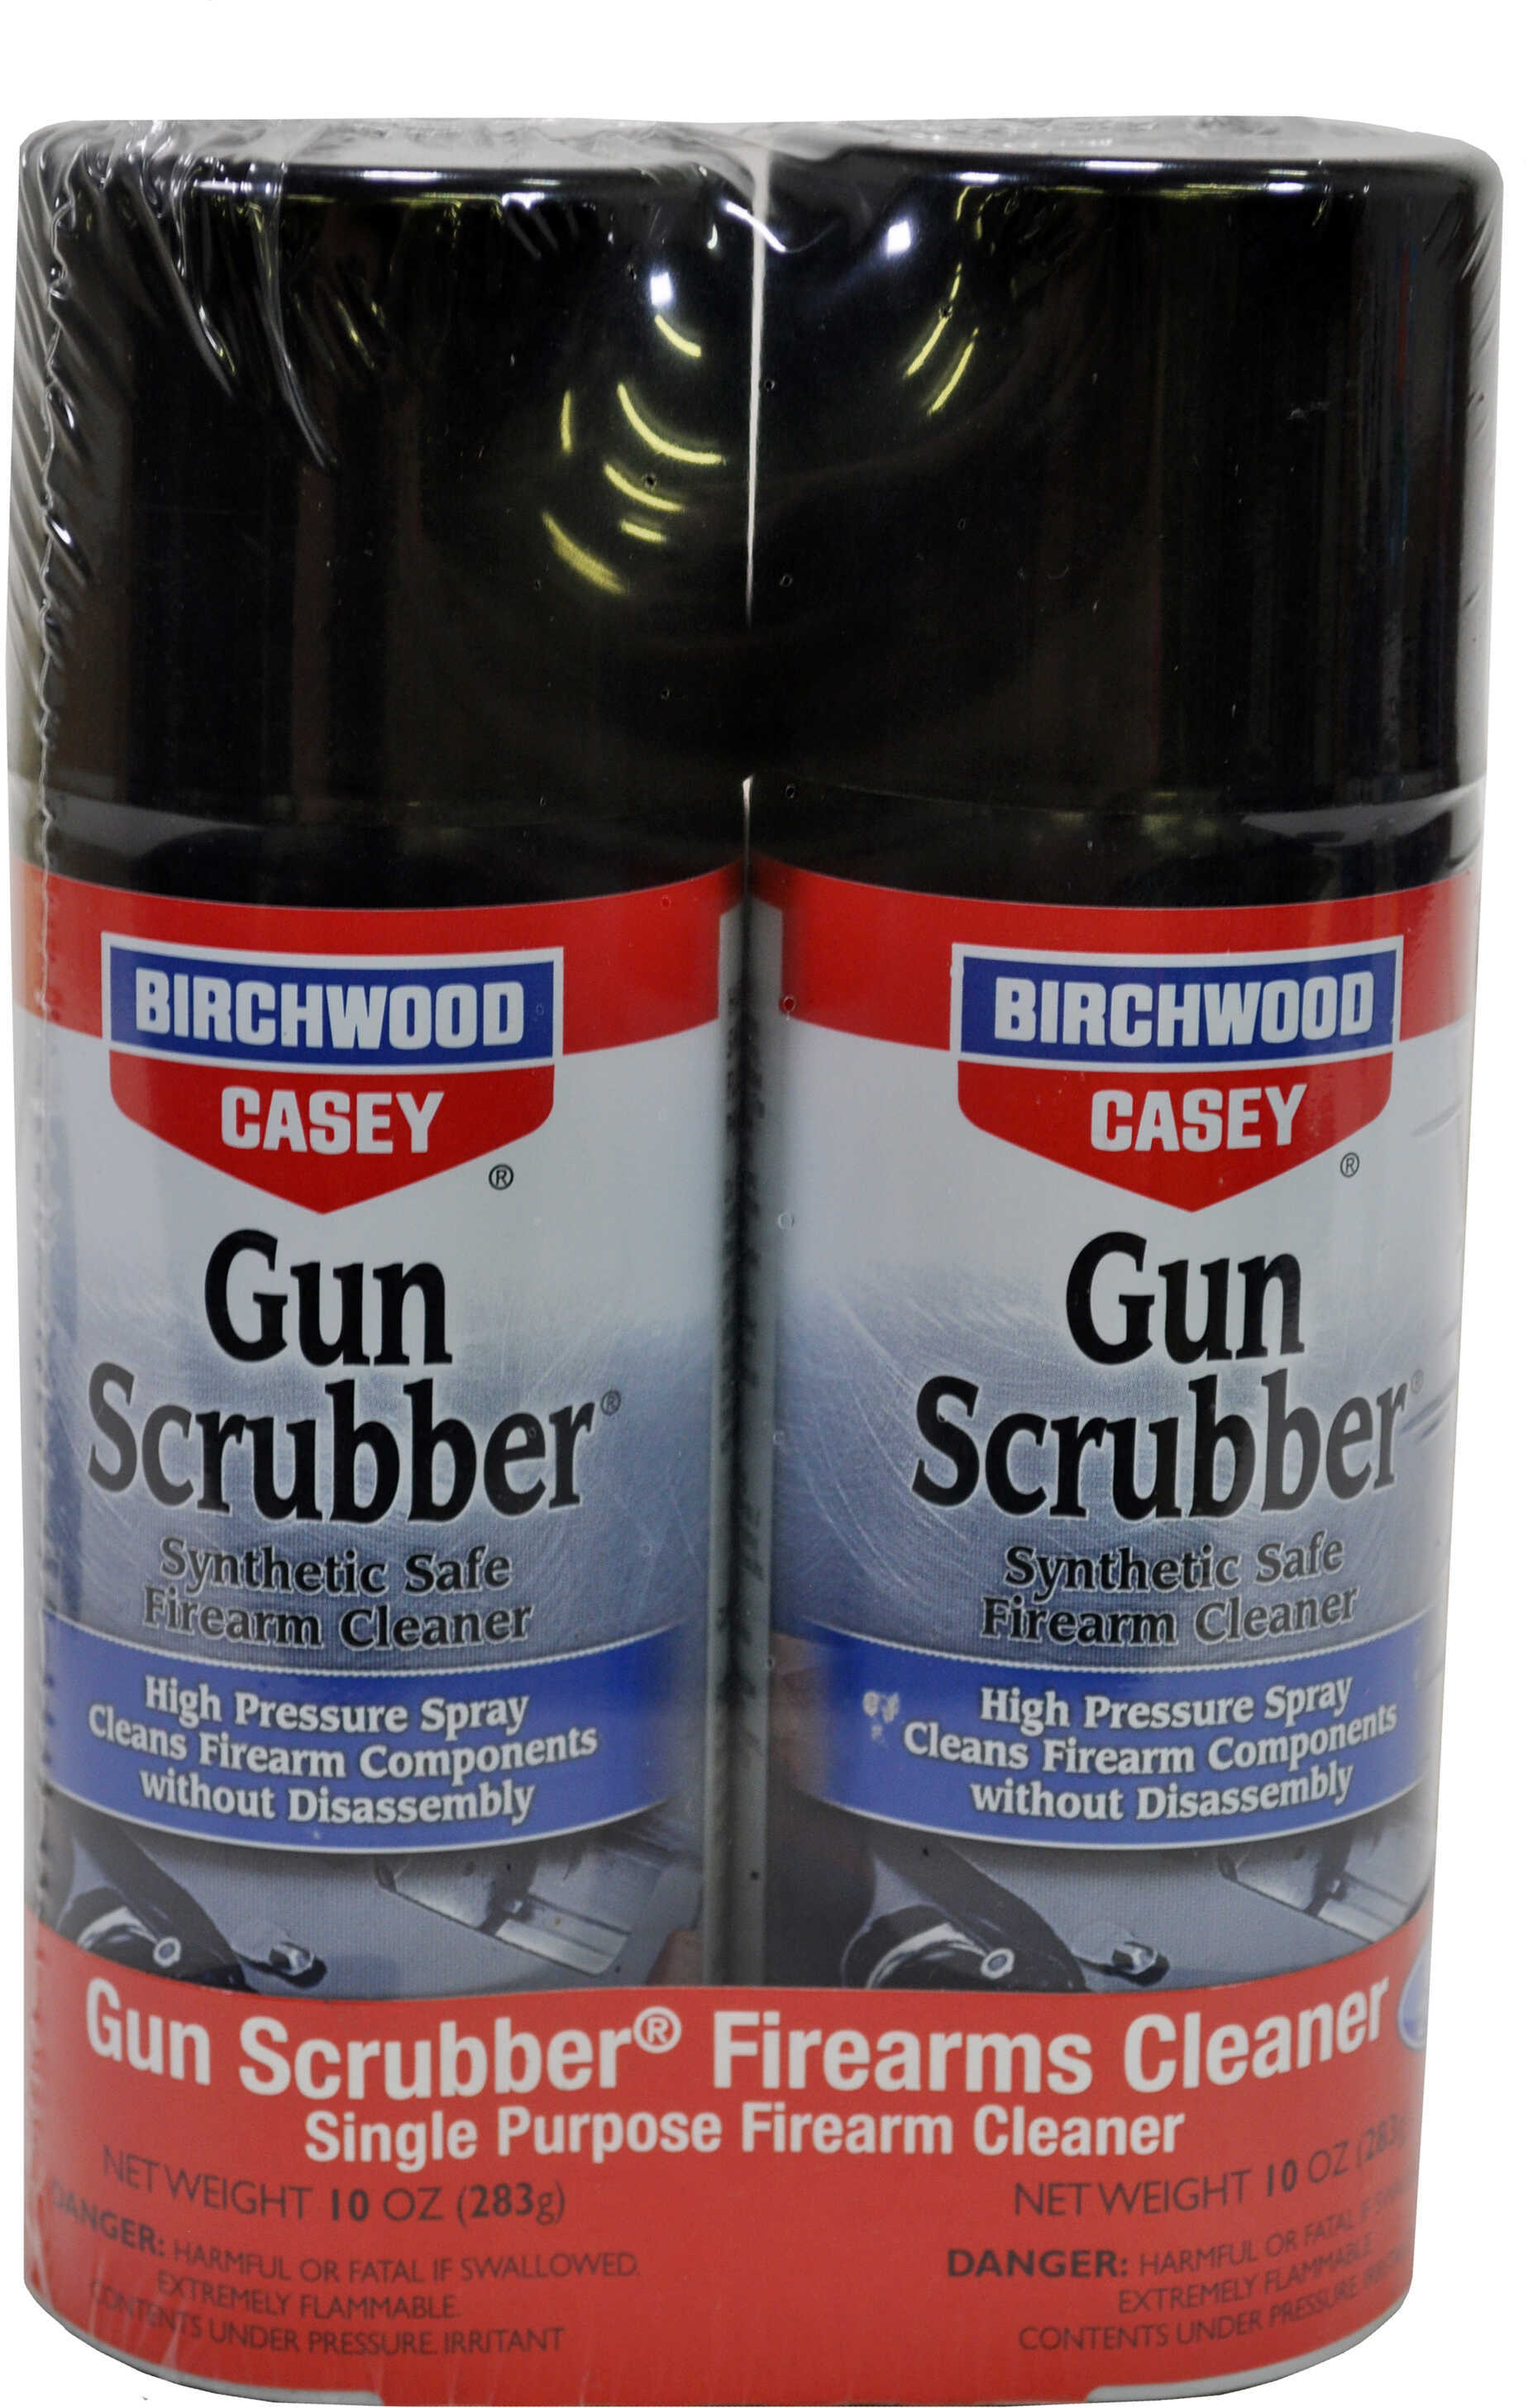 Birchwood Casey B/C Gun Scrubber Combo Pack Two 10 Oz. Aerosol CANS